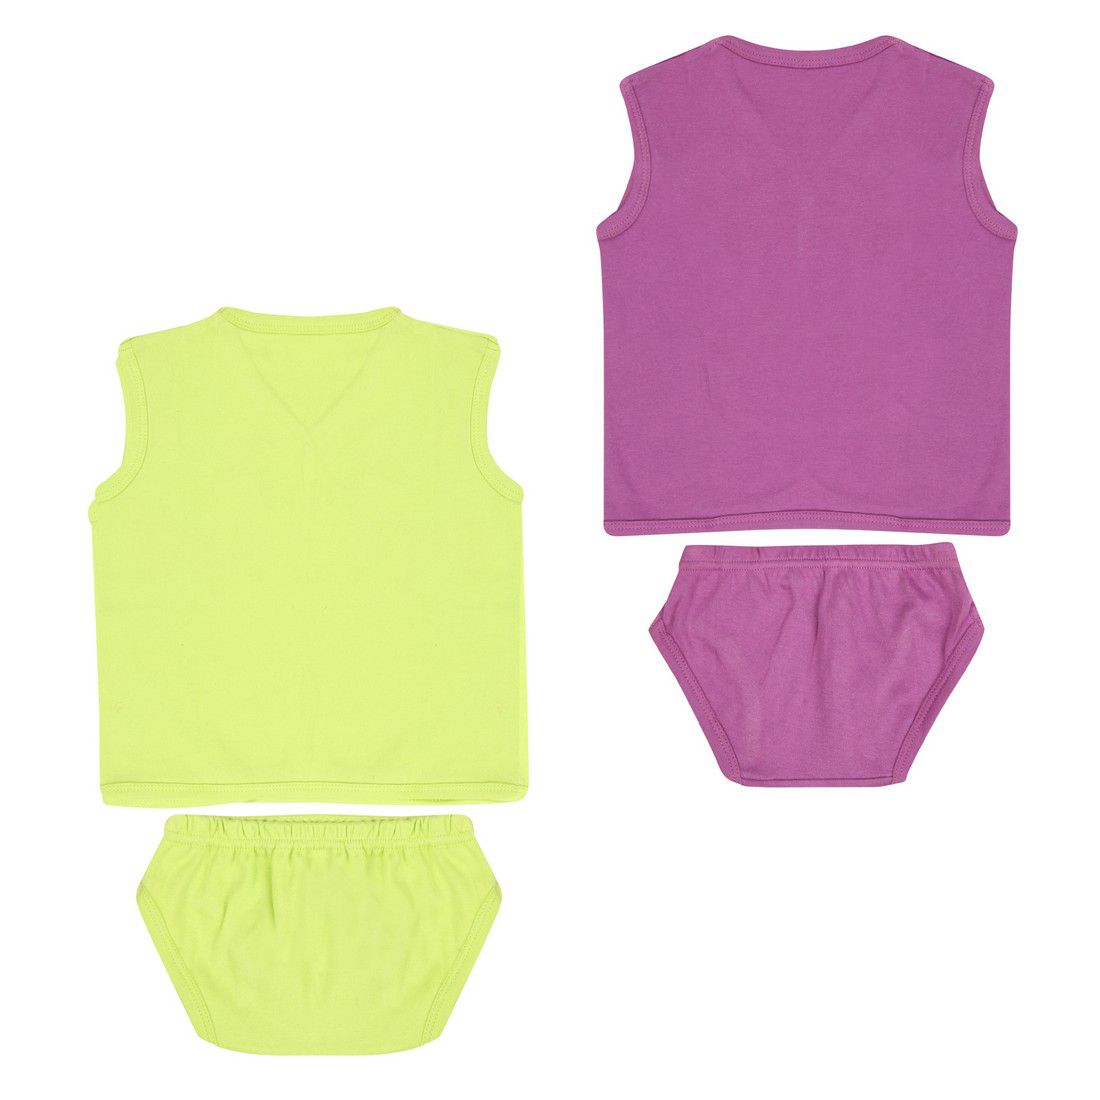     			Dongli Unisex Soft Cotton Baby Set Dress (Pack of 2)